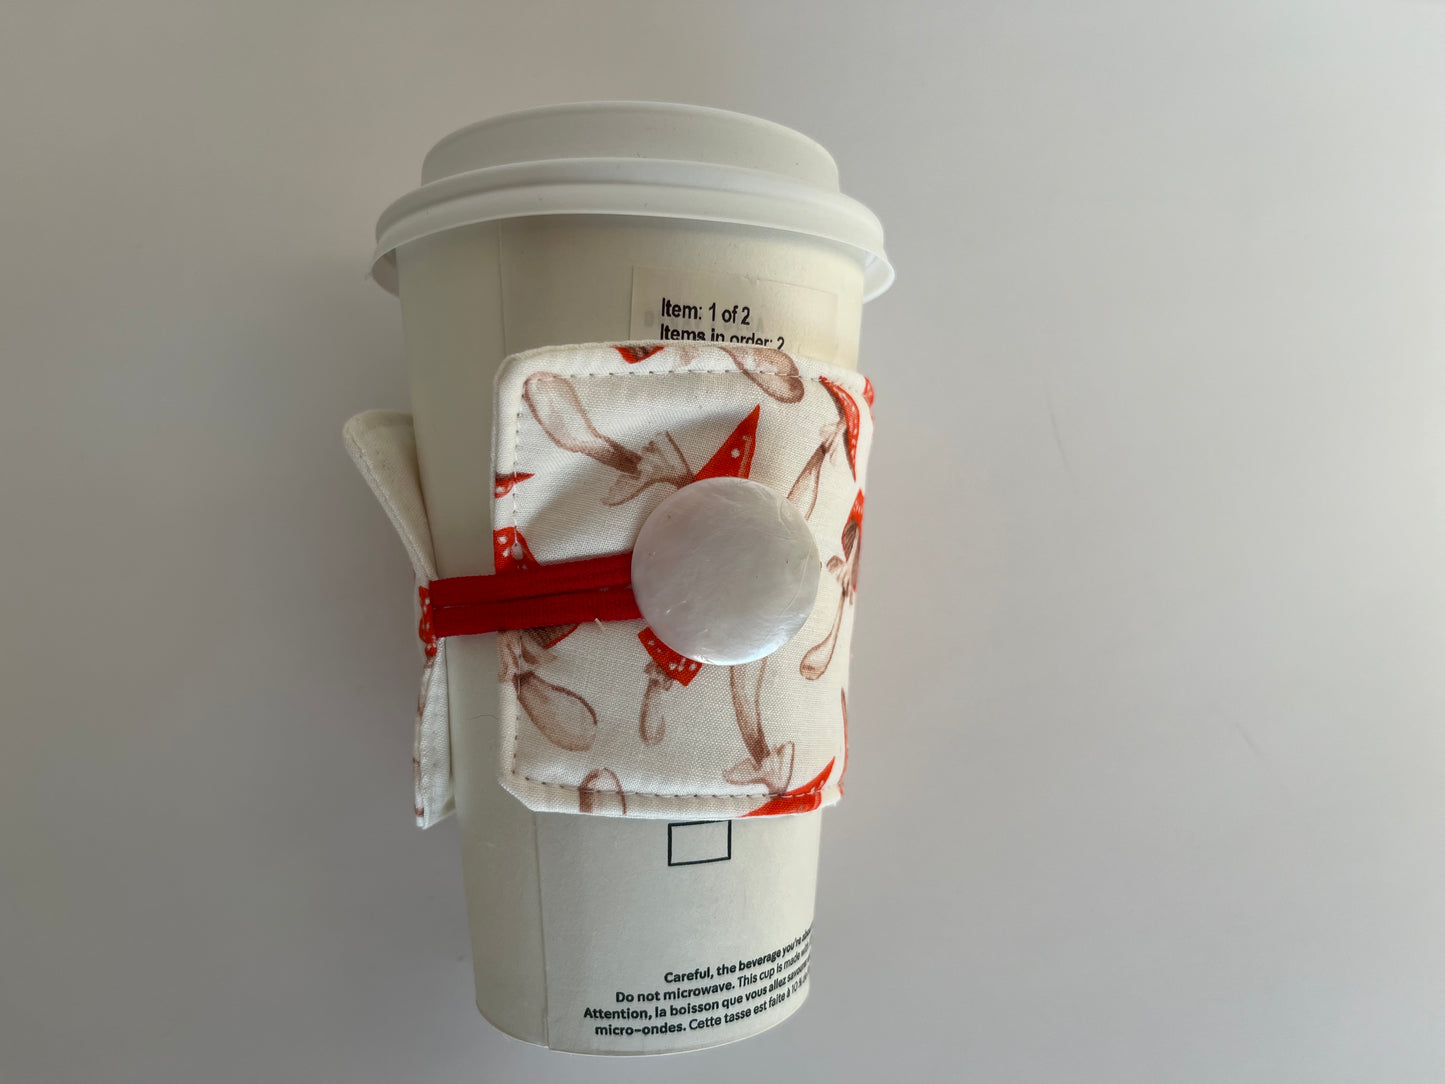 Mushrooms Cottagecore Themed Coffee Cup Cozy, fabric coffee sleeve